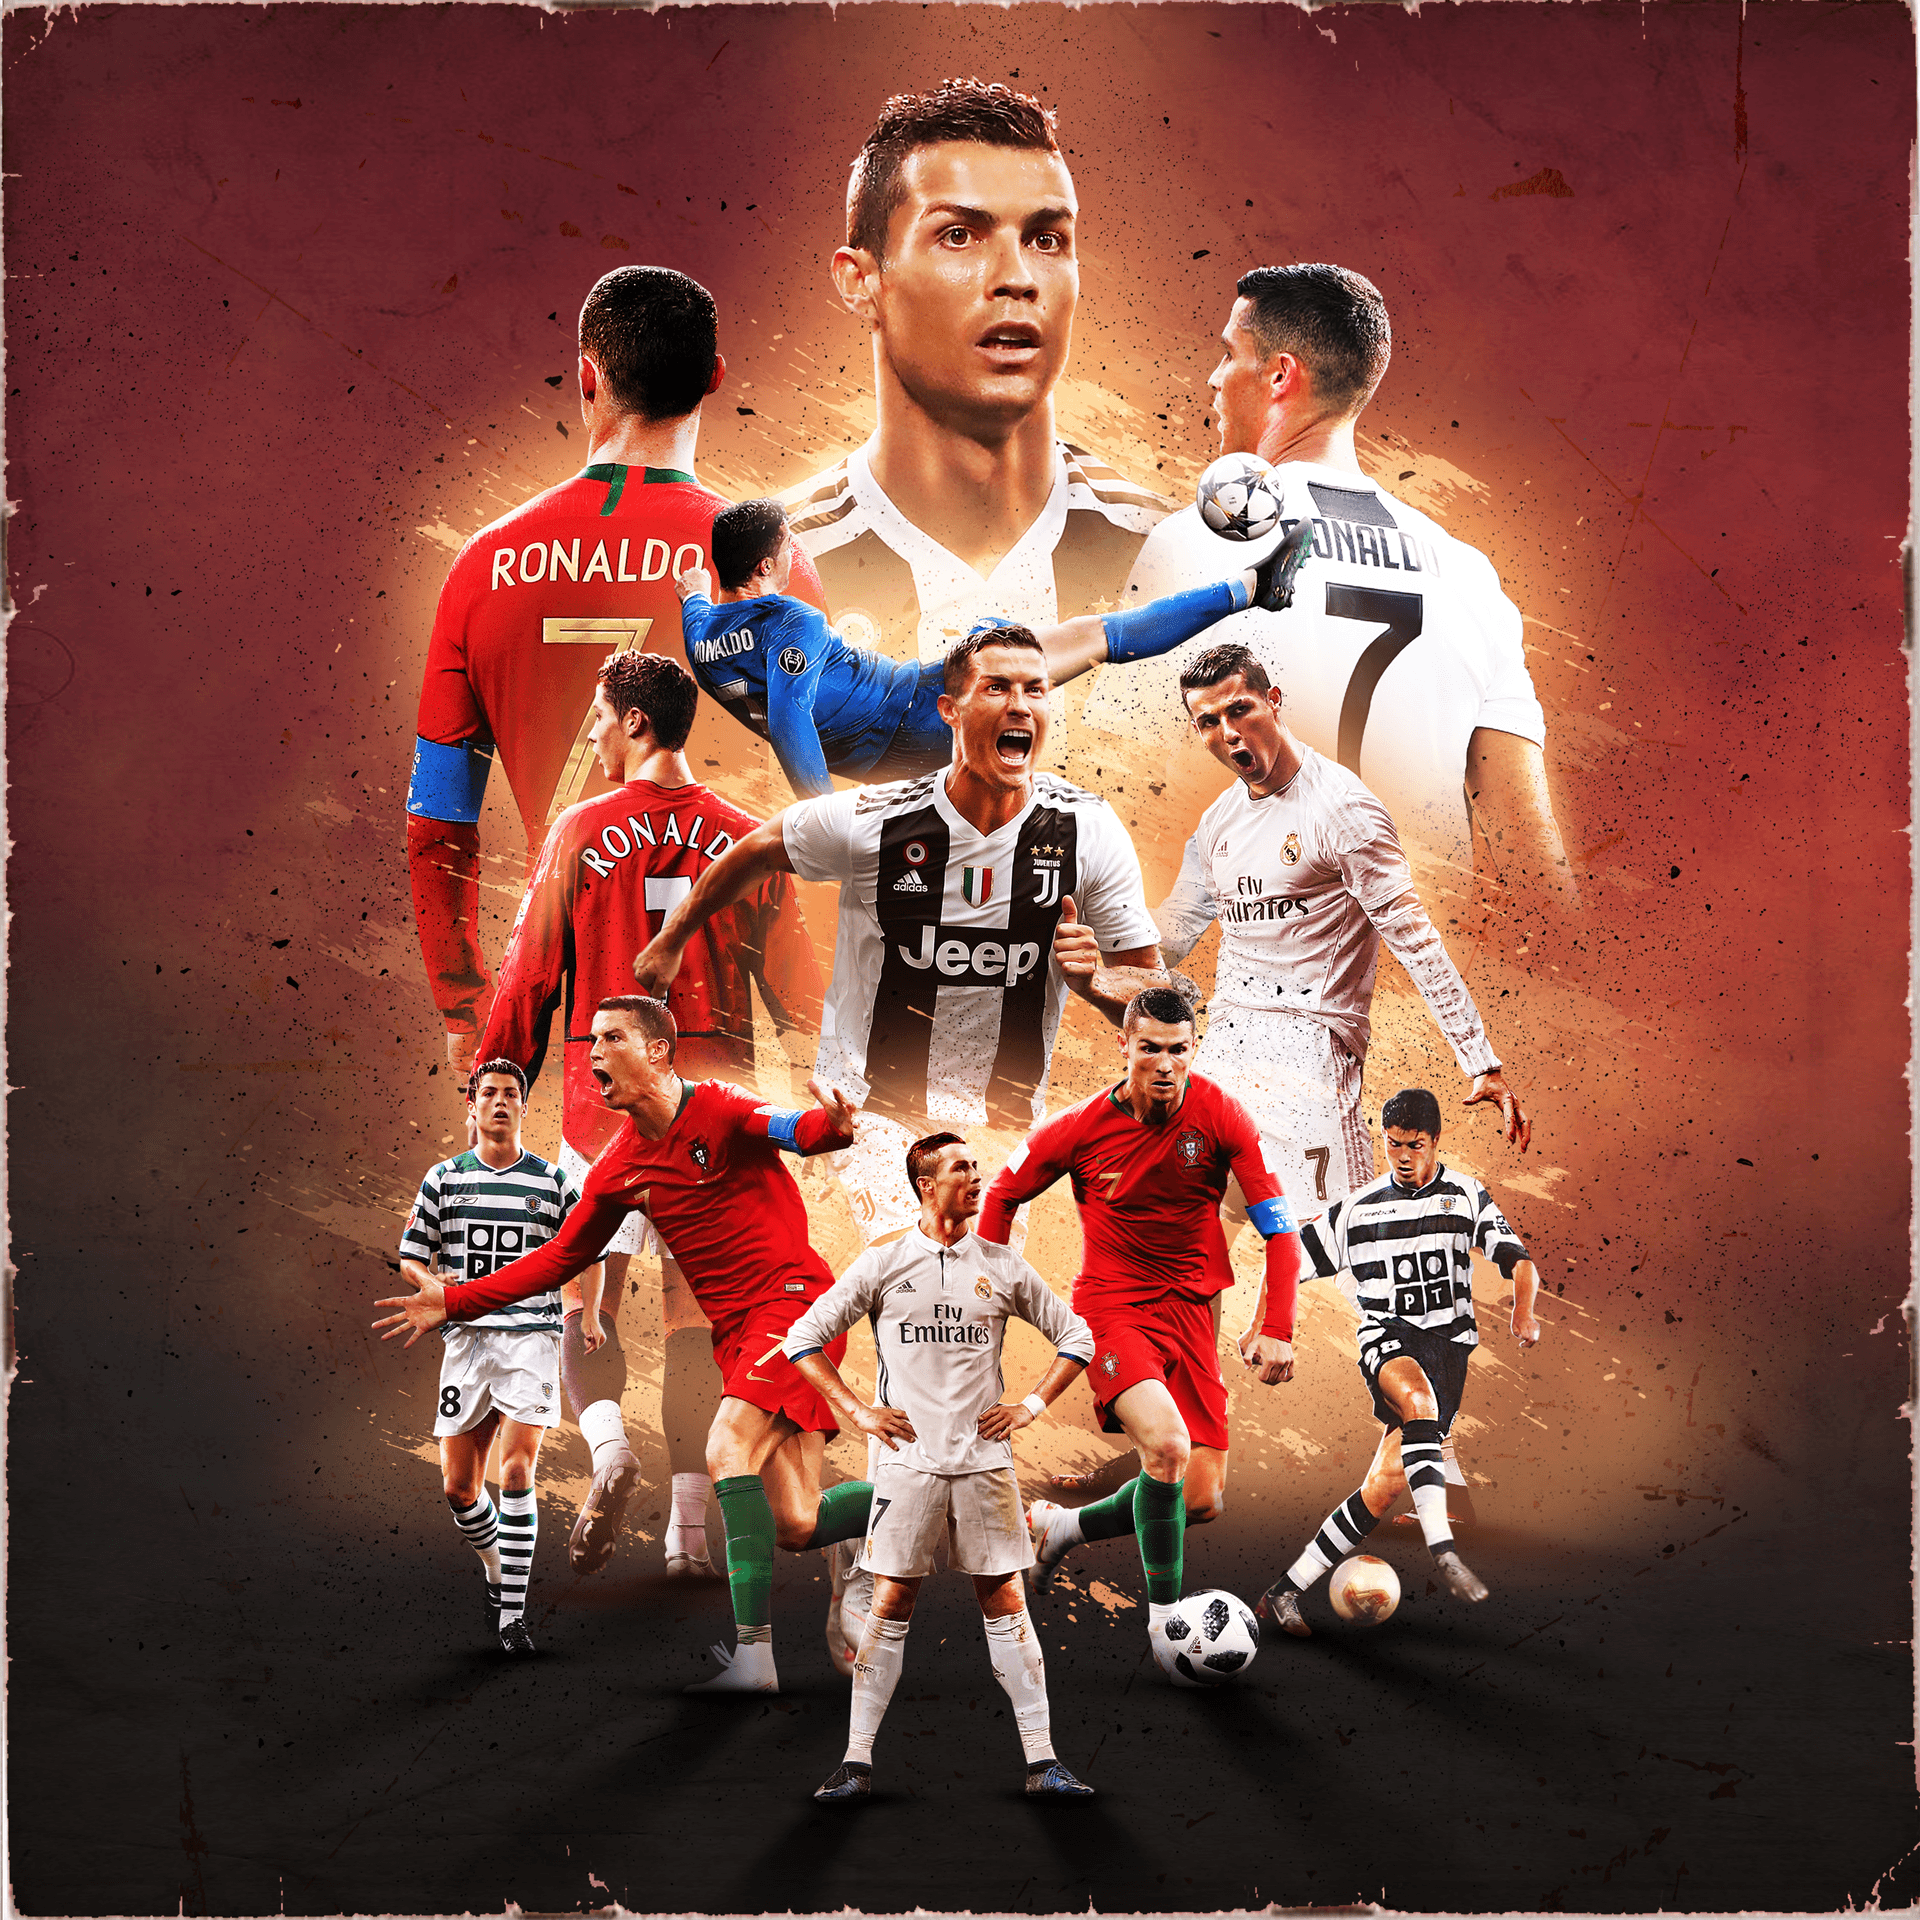 Football Collage. 球類主視覺設計海報. Ronaldo